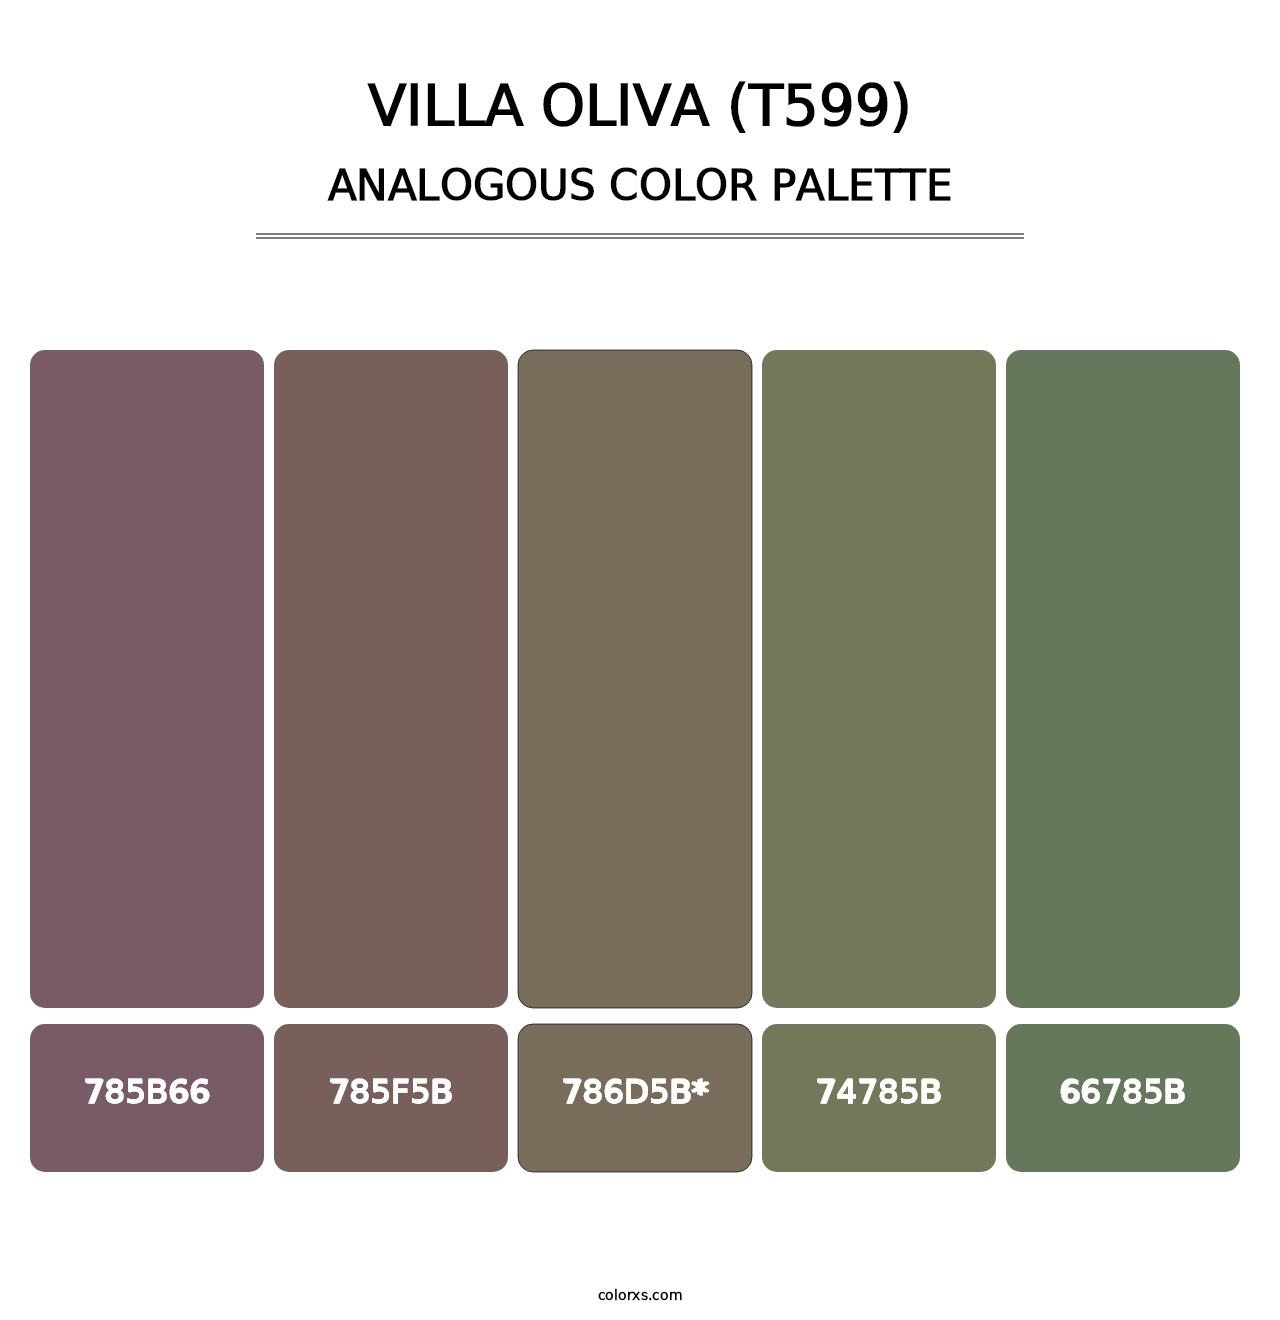 Villa Oliva (T599) - Analogous Color Palette